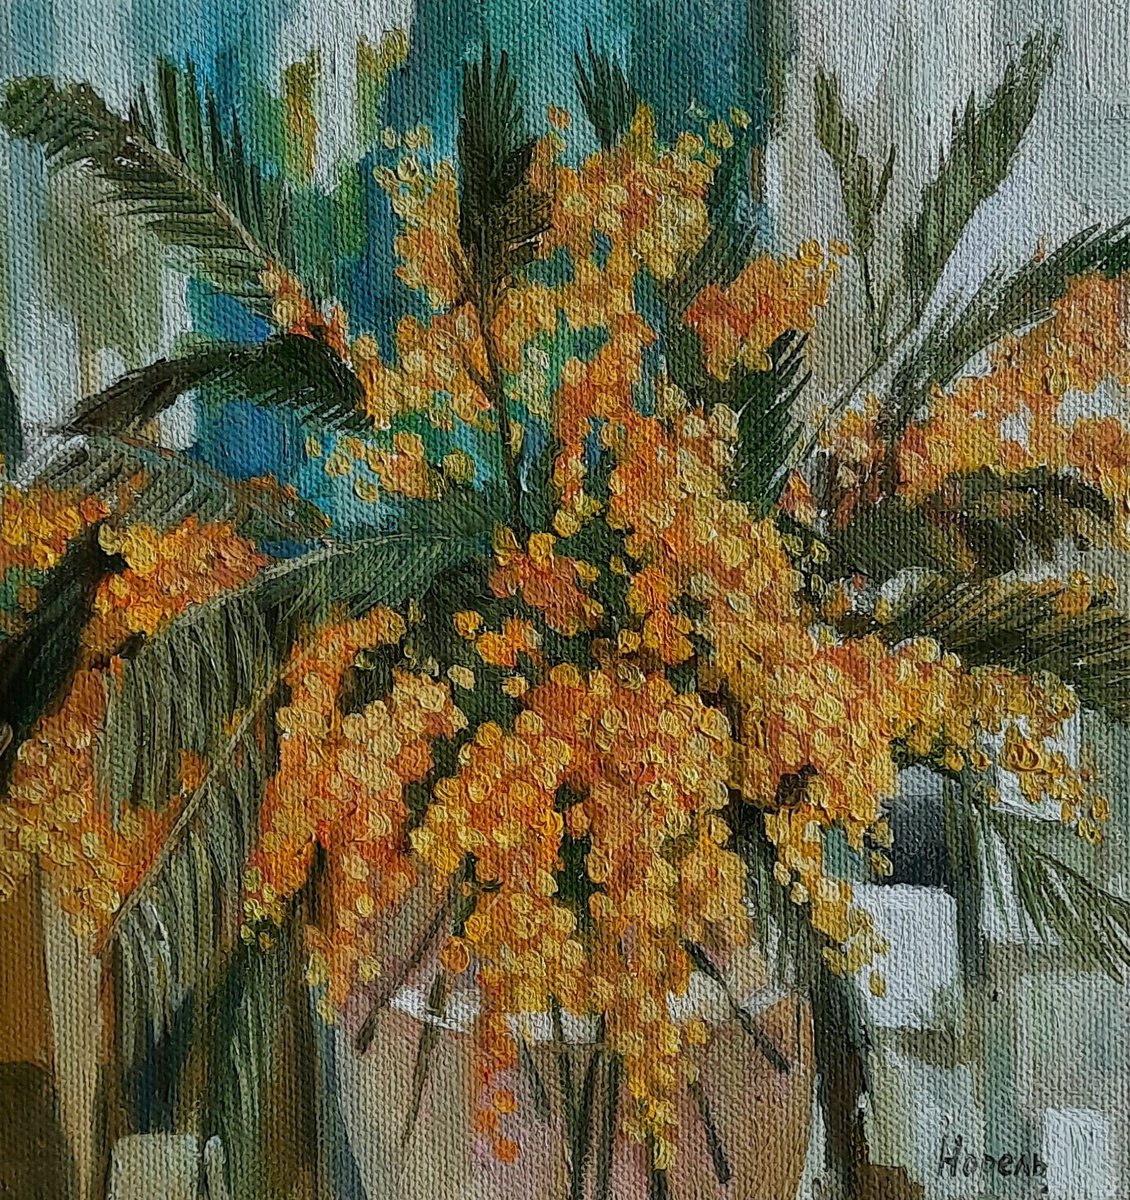 Mimosa-Original oil painting (2021) by Svetlana Norel